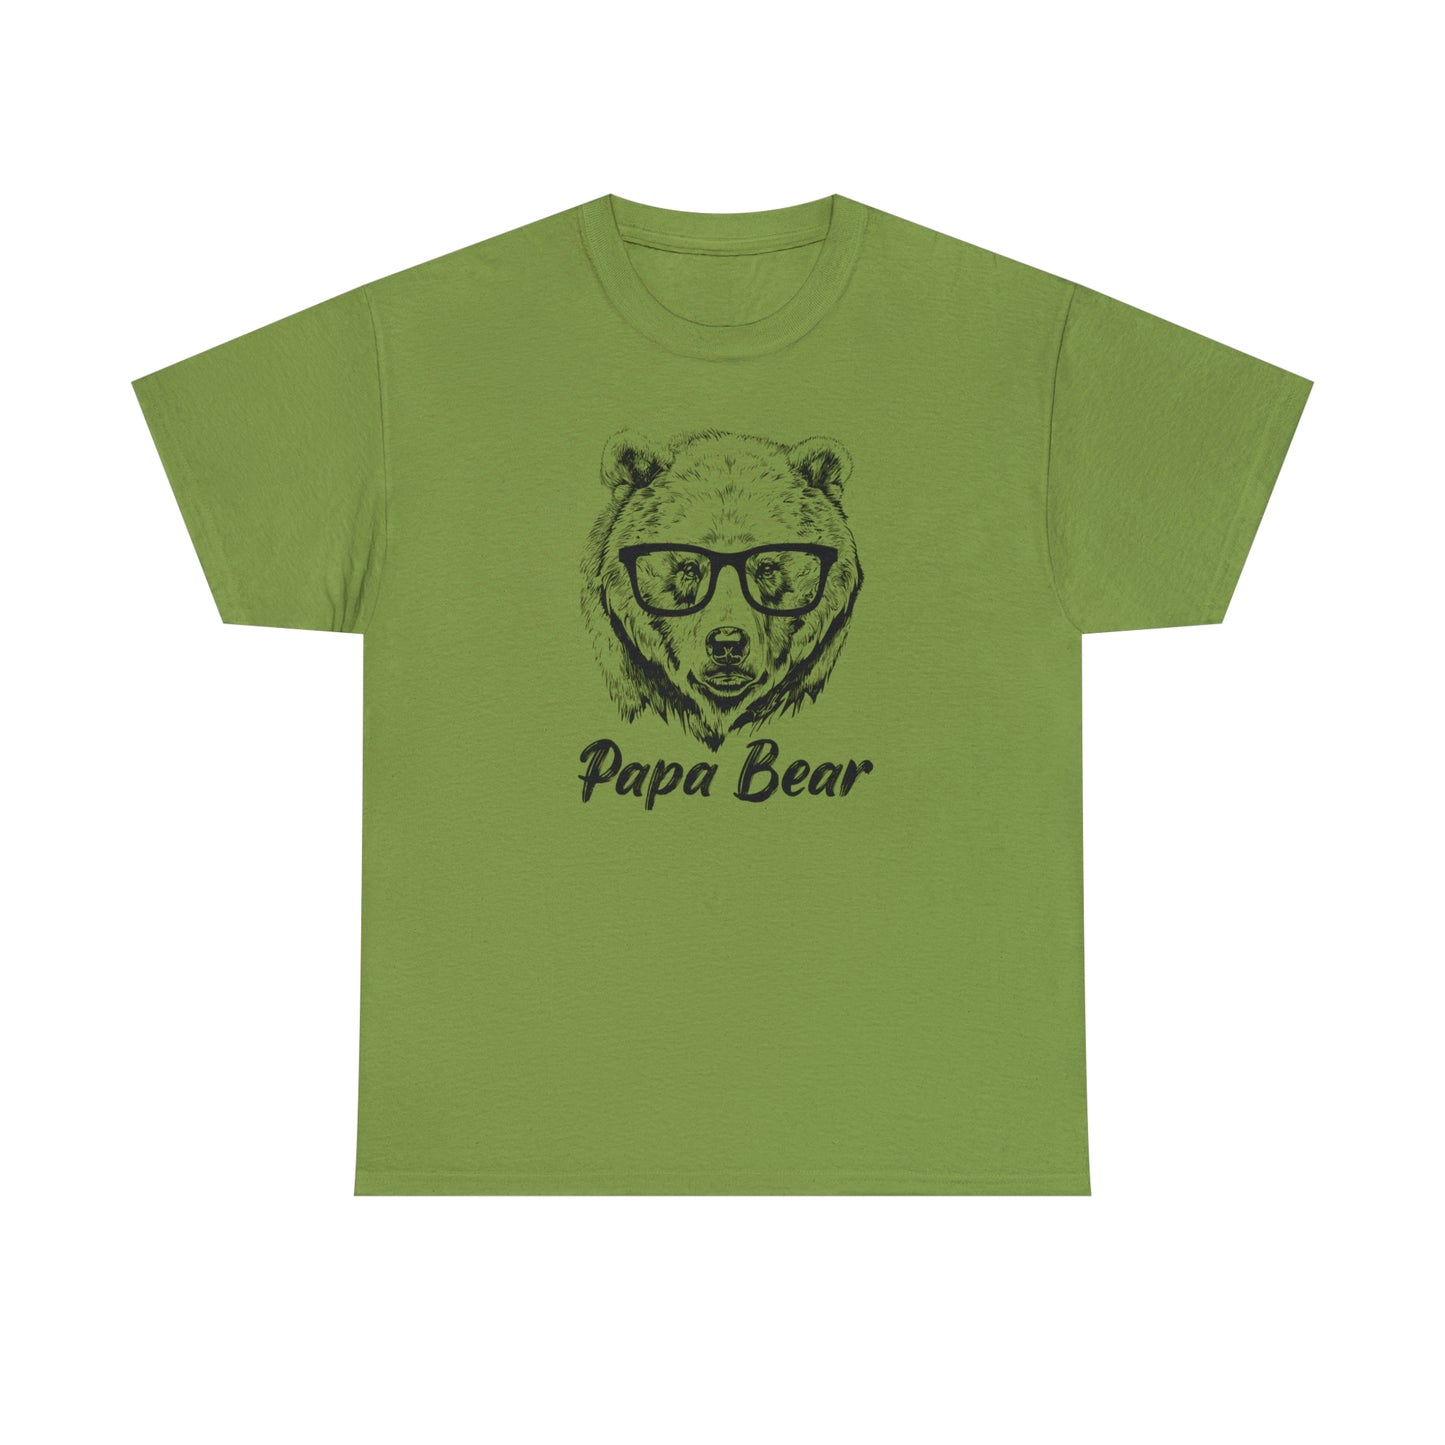 Papa Bear T-Shirt For Protective Parent TShirt For Dad Shirt For Father's Day Gift Shirt for Dad T Shirt For Grandpa T-Shirt For Men